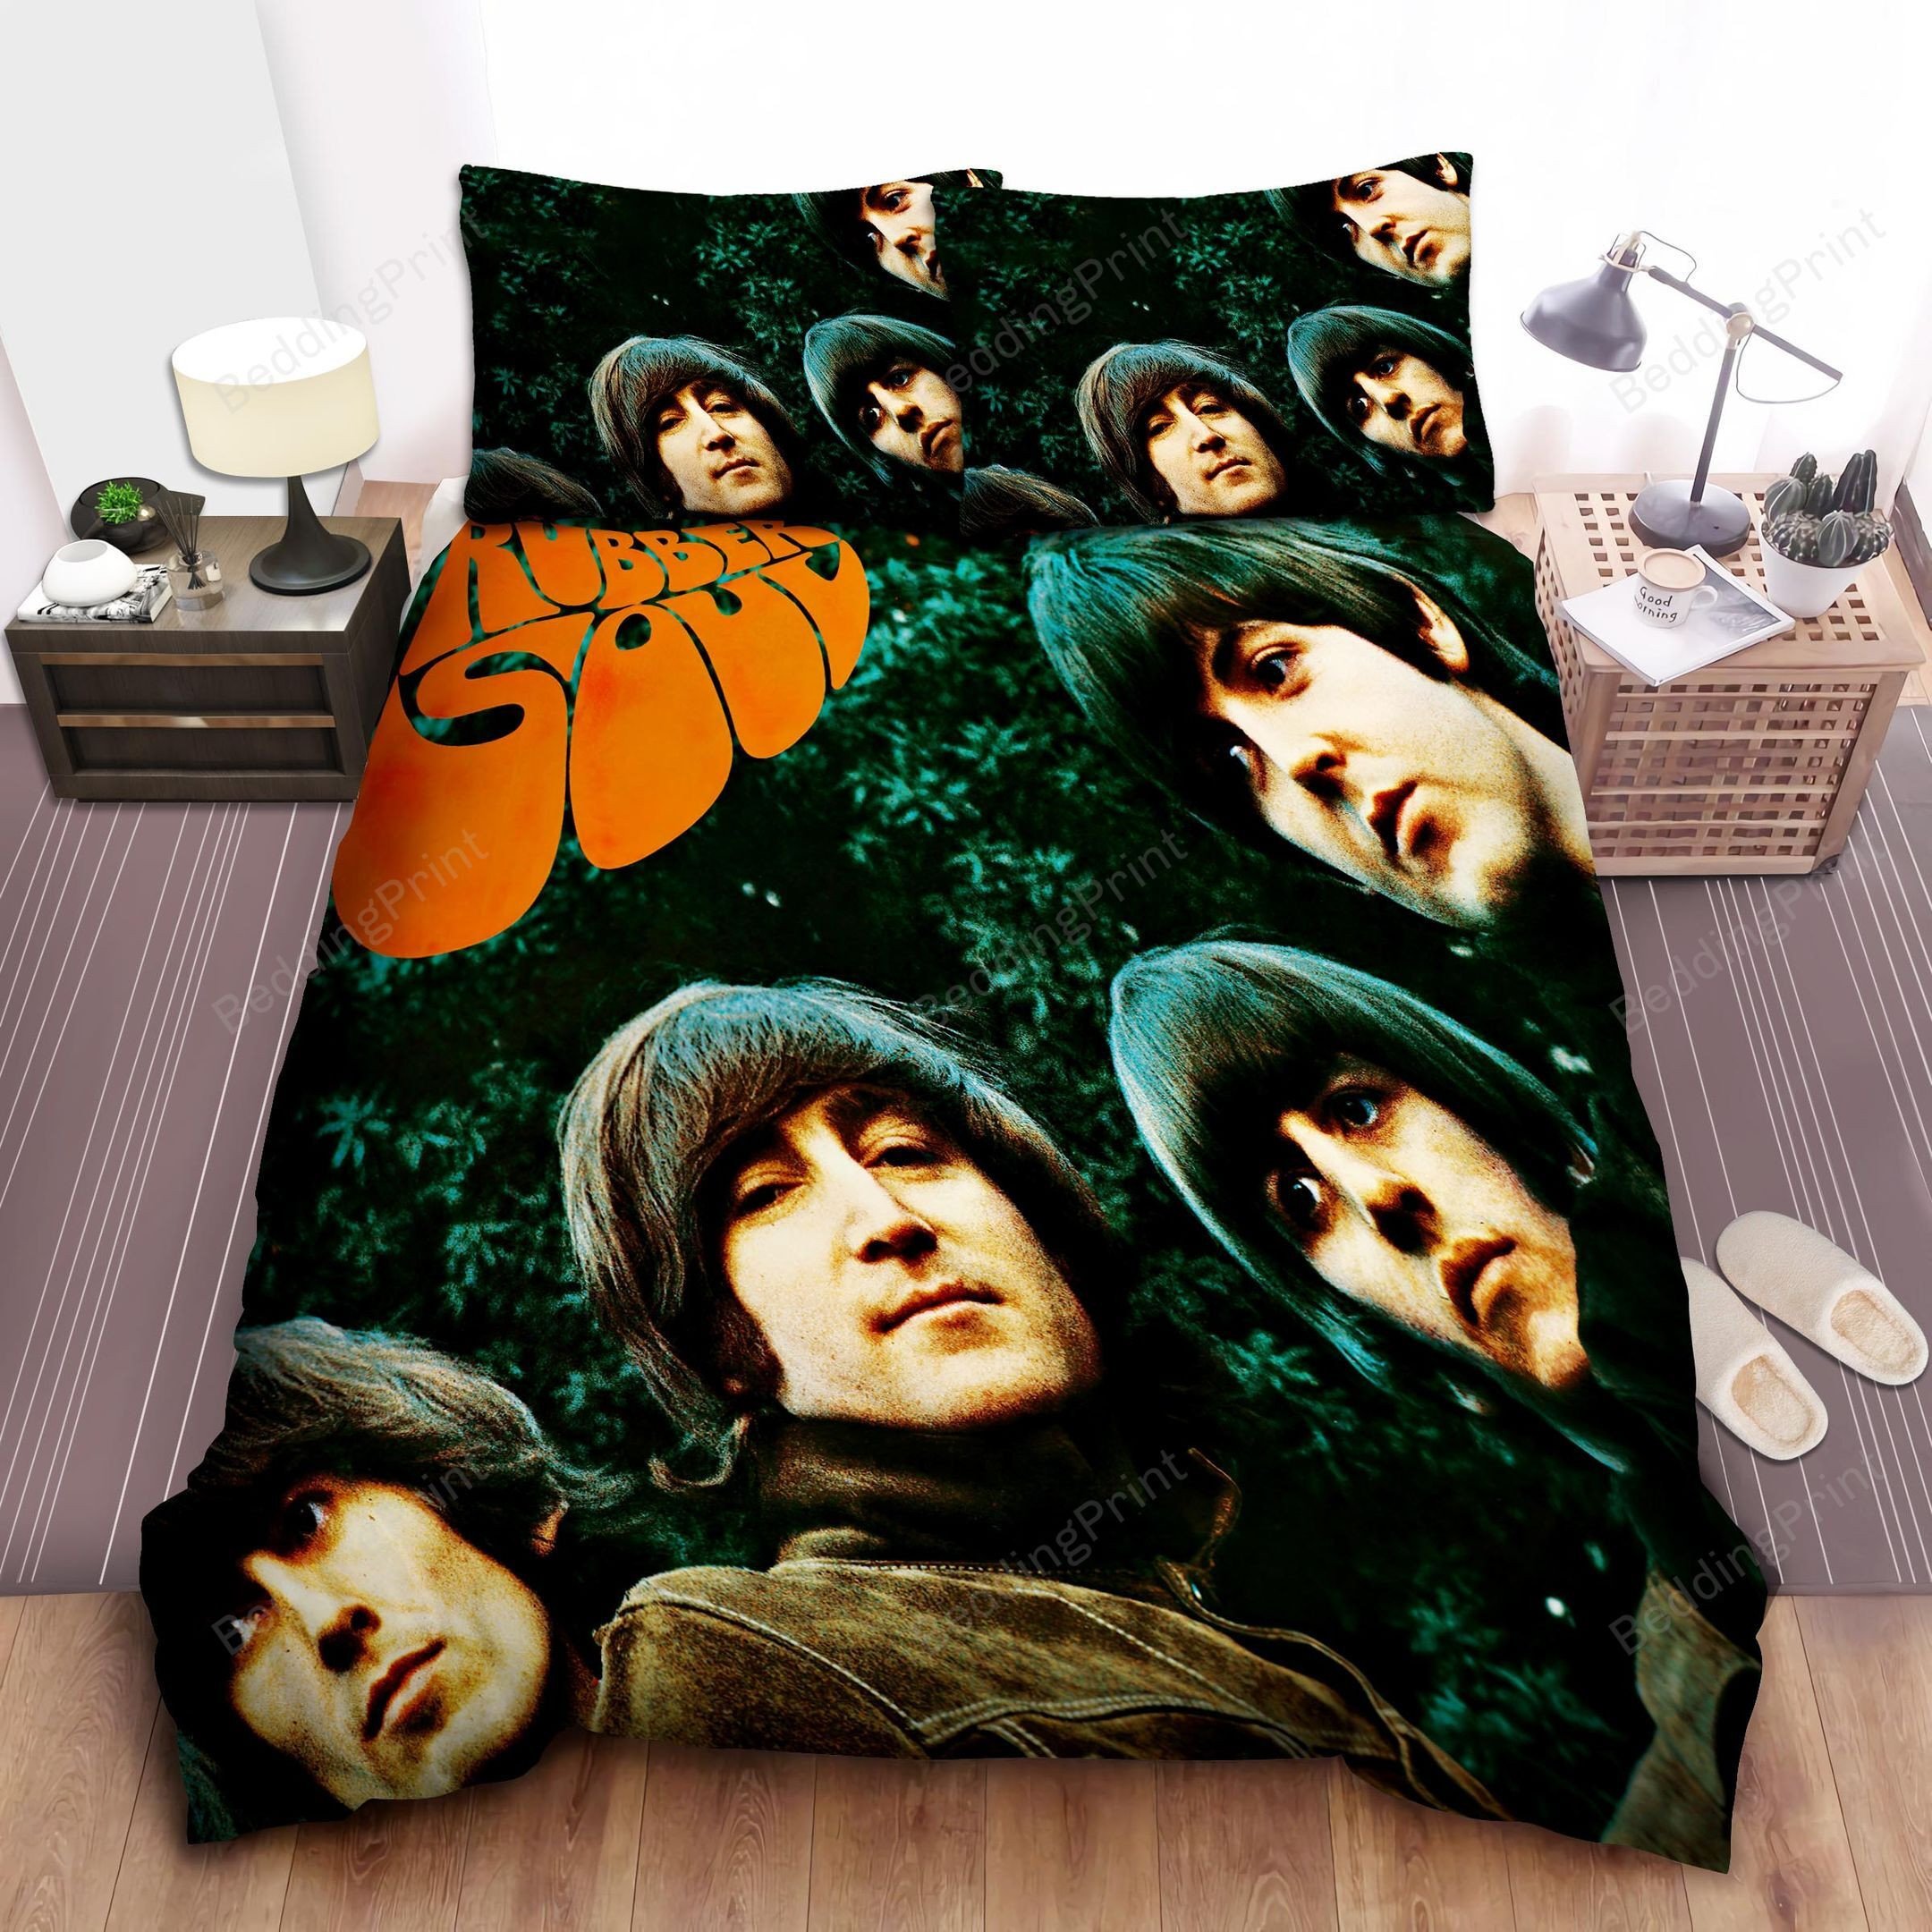 The Beatles Rubber Soul Album Cover Bed Sheet Duvet Cover Bedding Sets ...